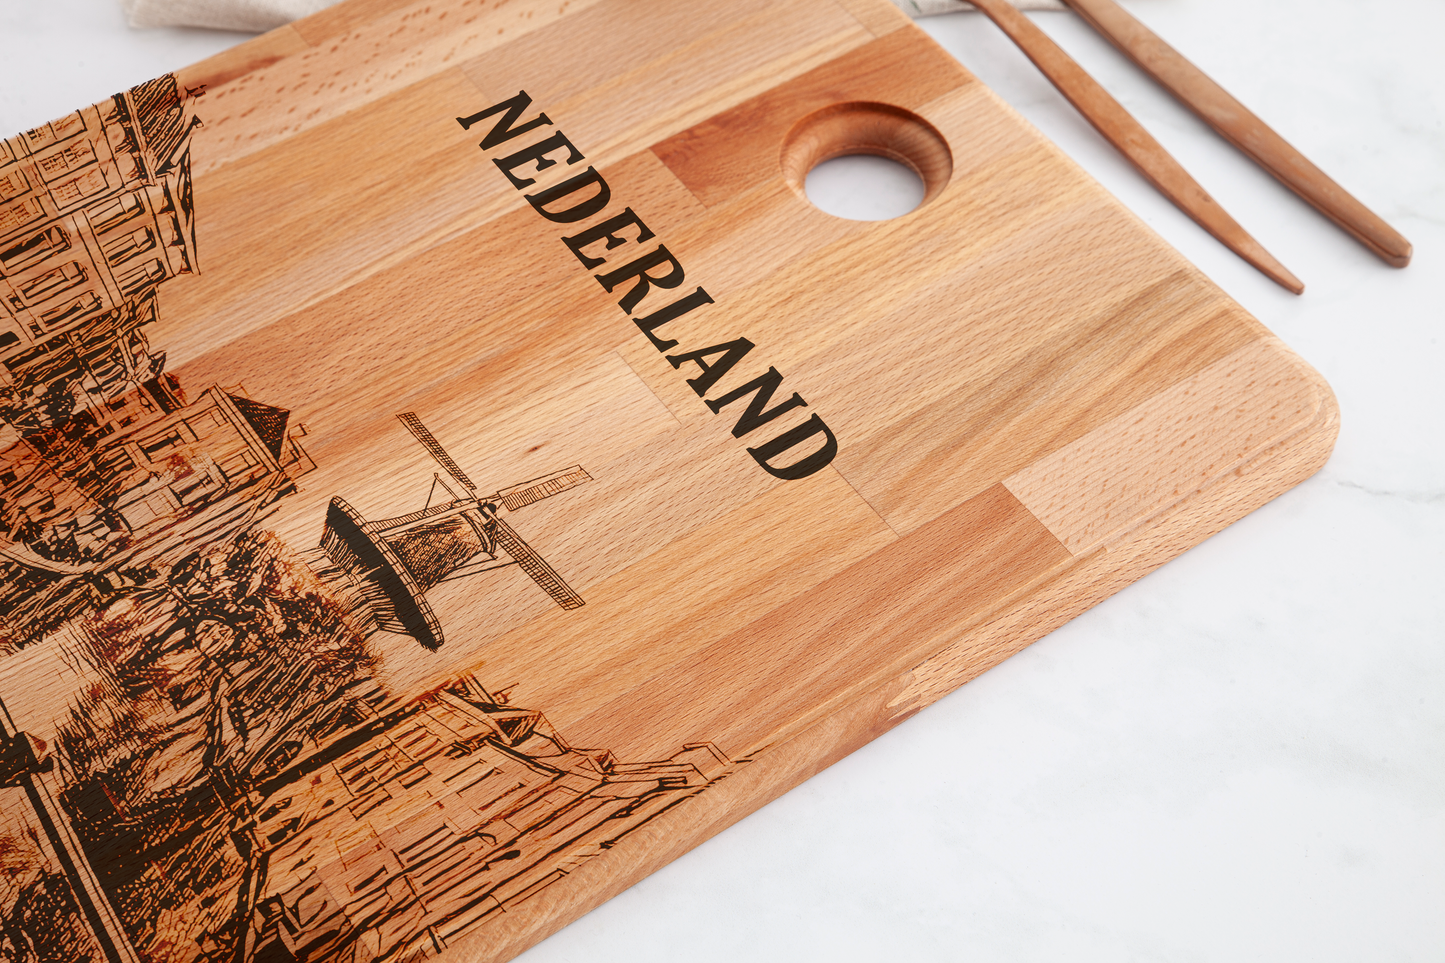 Nederland, City View, cutting board, wood grain